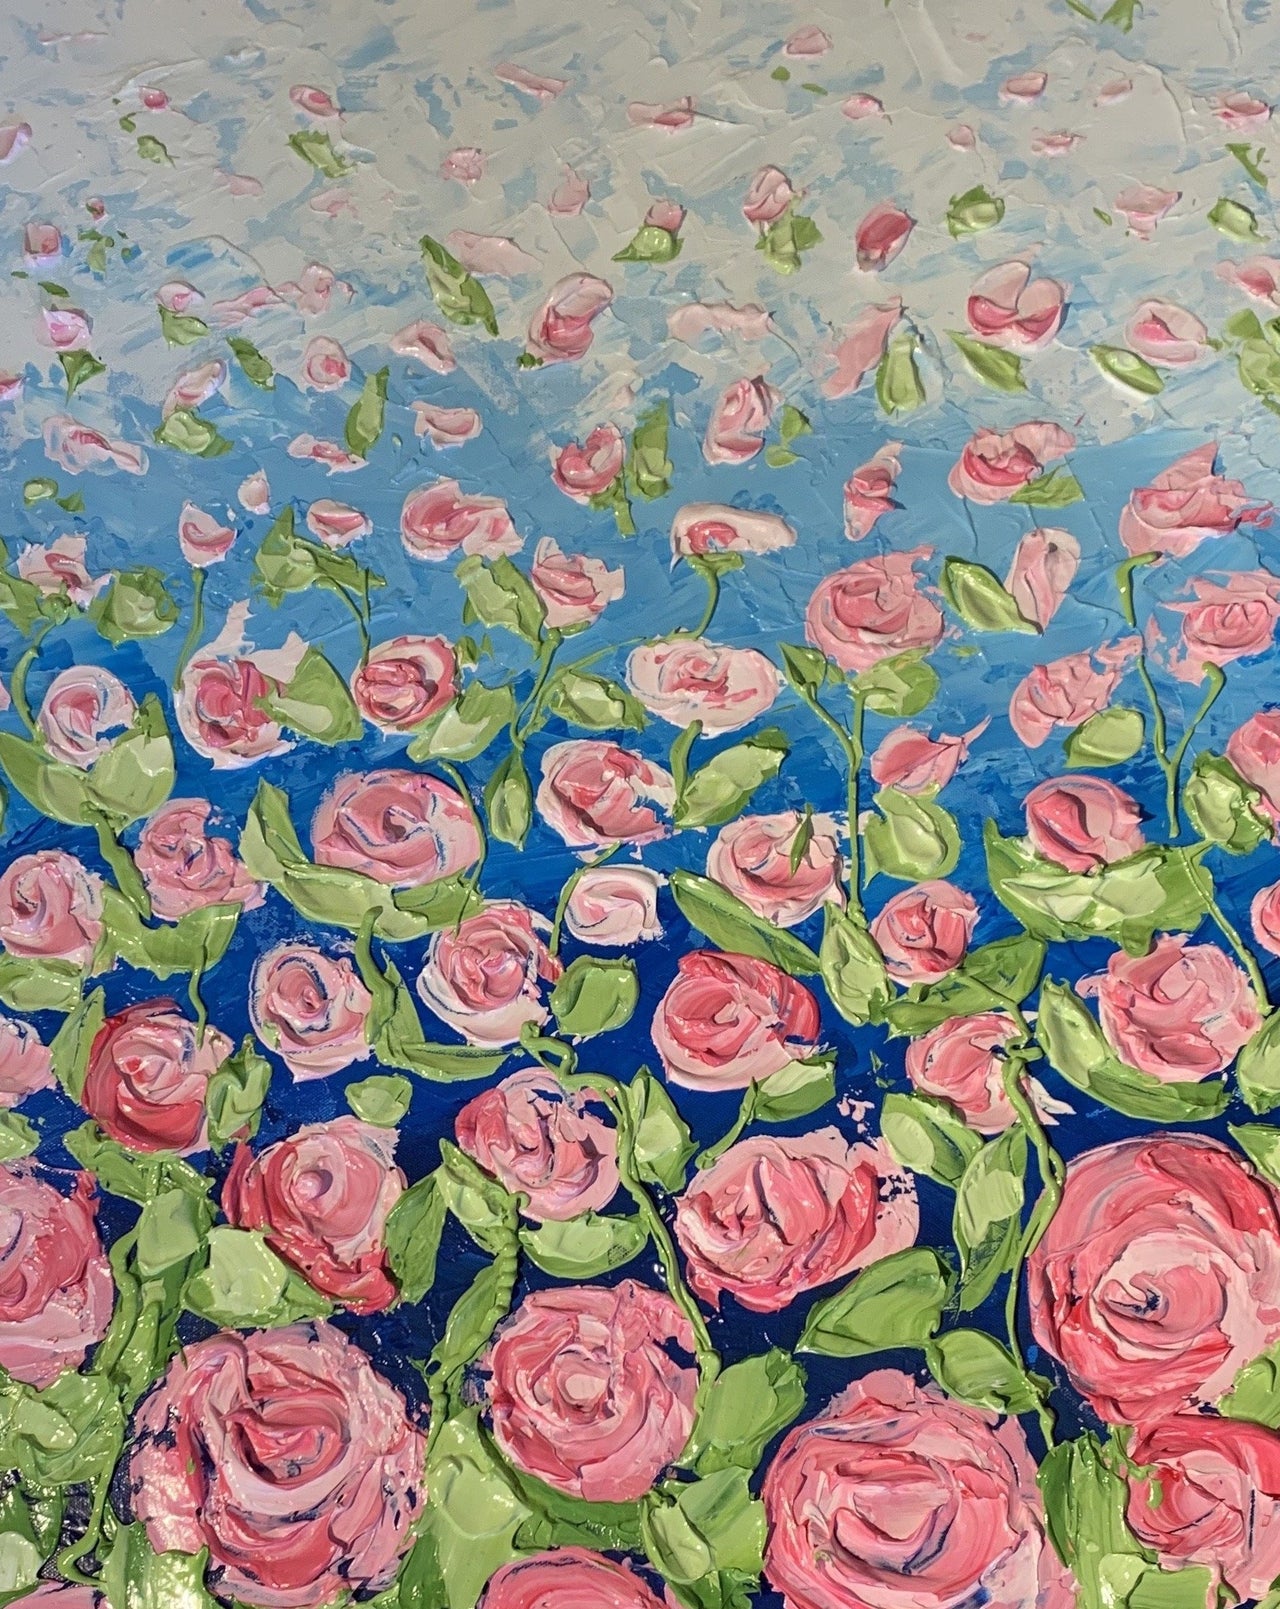 It's Raining Roses" 24" x 36" x 1.5" - Artwork